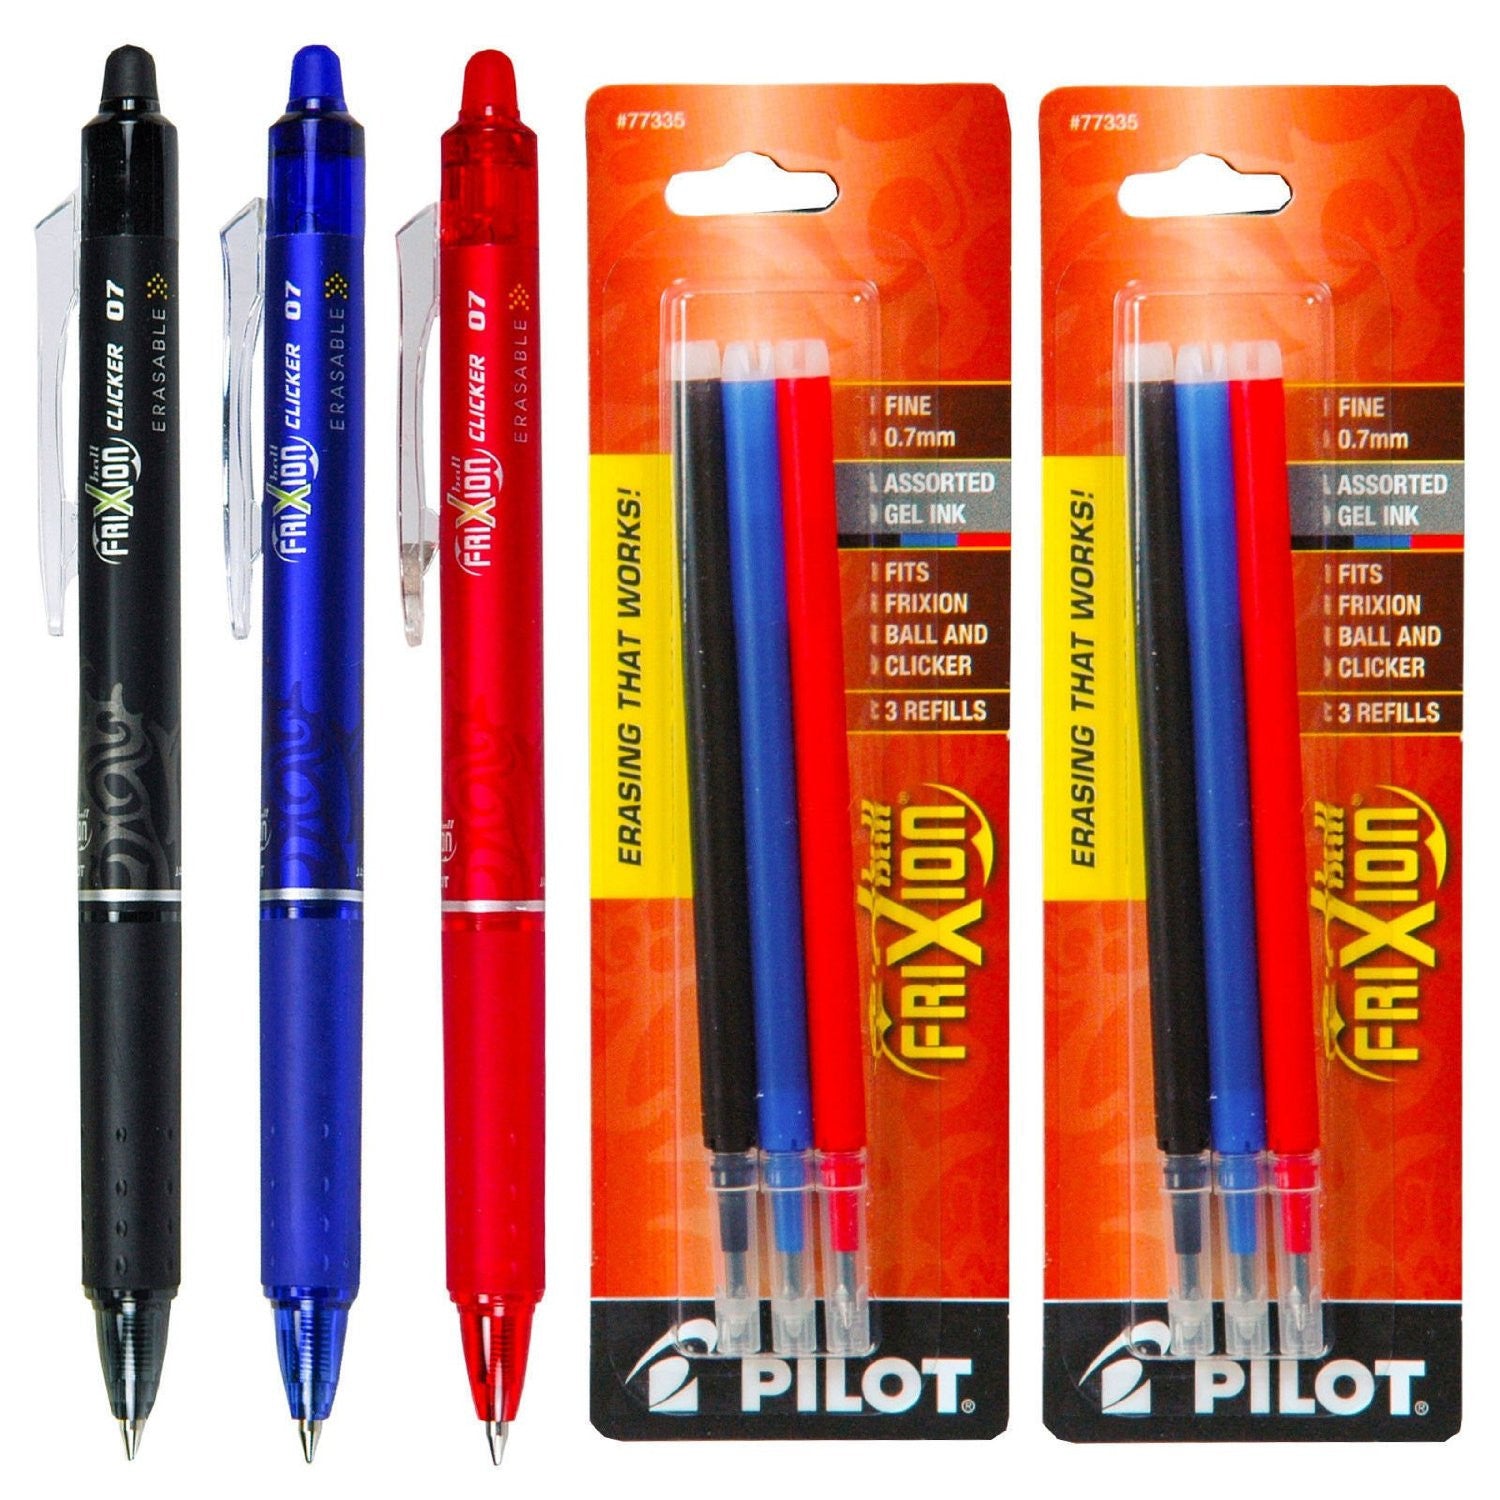 Pilot FriXion Clicker Fine Point Retractable Erasable Gel Ink Pens Assorted 8ct